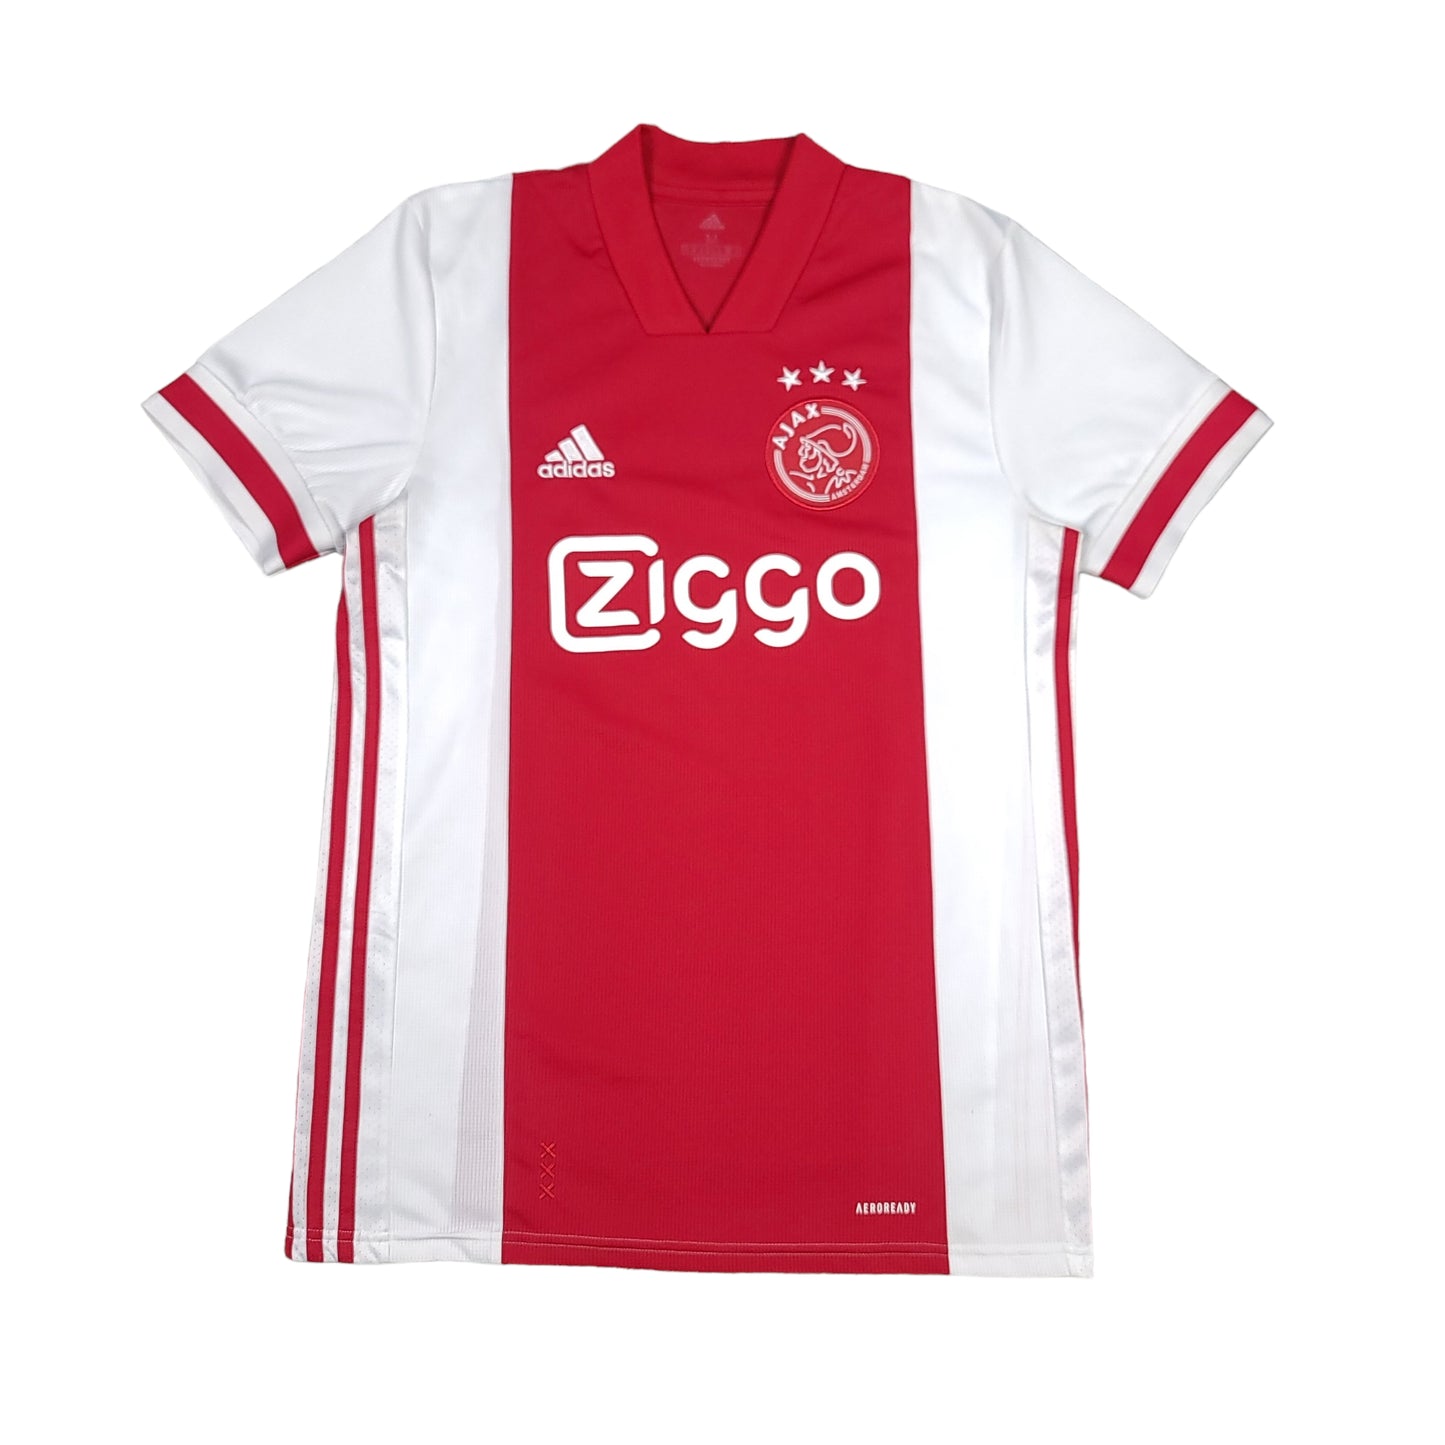 Ajax Amsterdam Red/White 2020-21 adidas Soccer Jersey